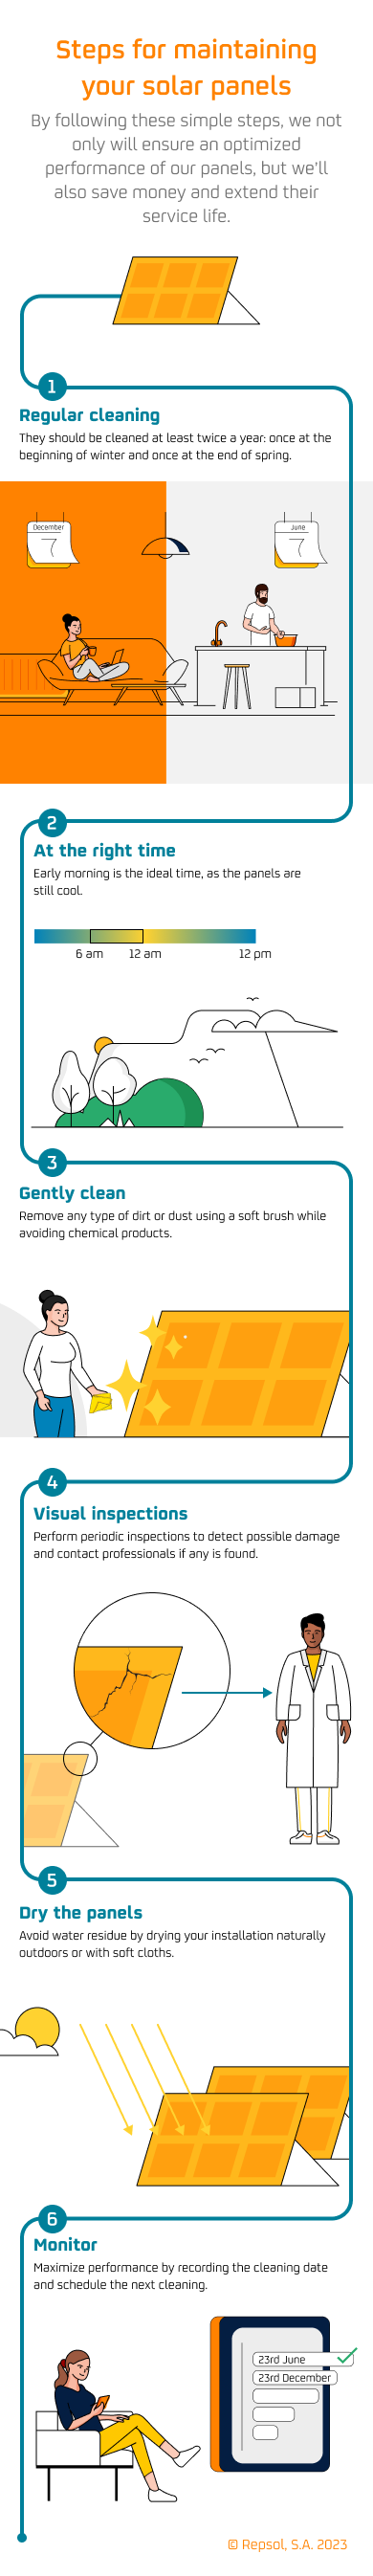 Solar panel maintenance infographic